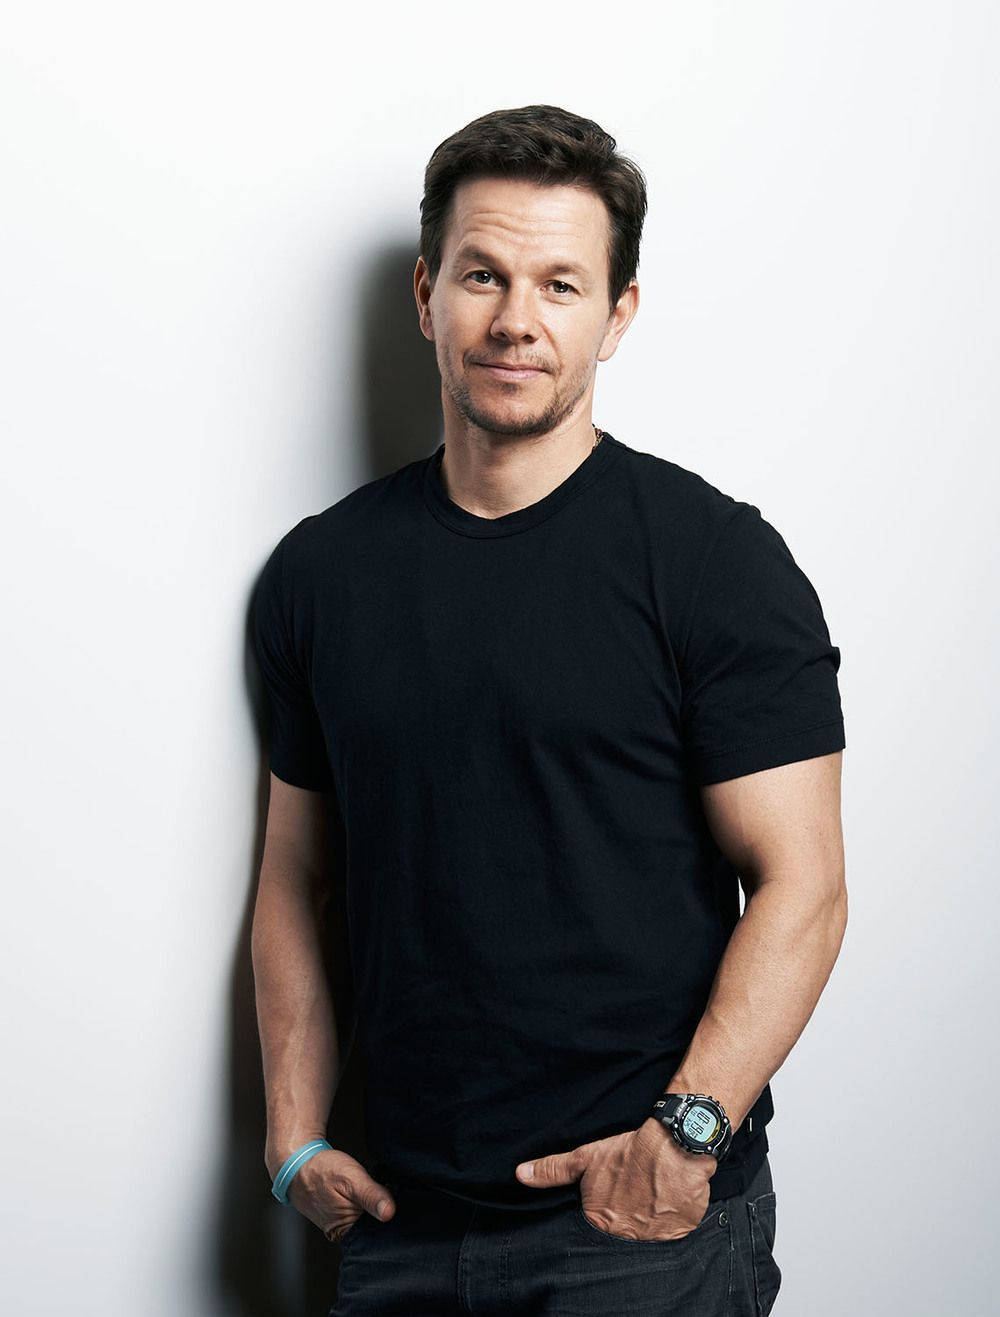 Mark Wahlberg In Black Shirt Wallpaper